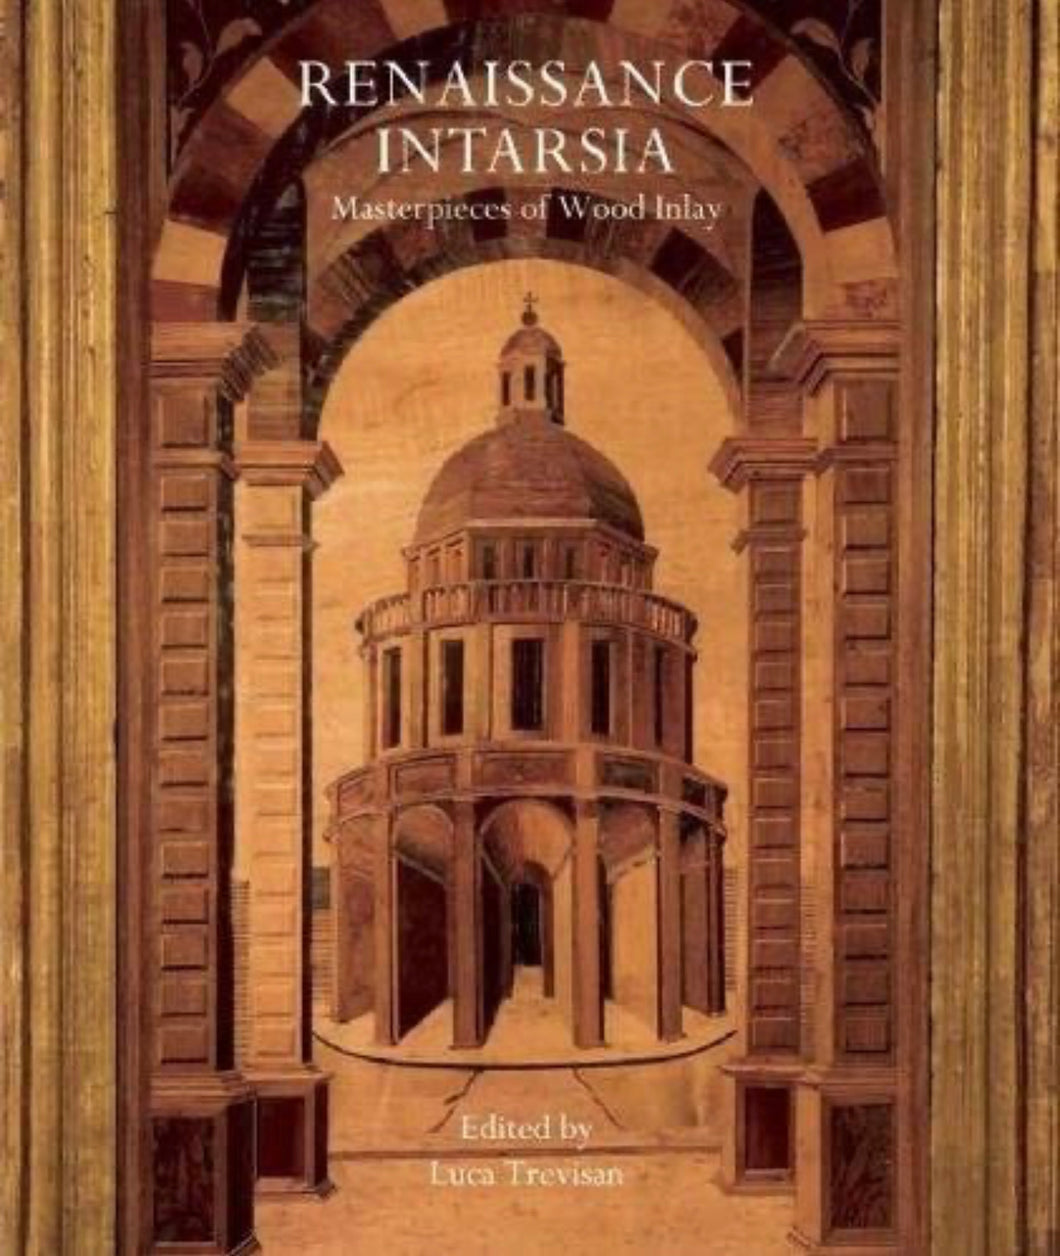 Renaissance Intarsia, Masterpieces of Wood Inlay